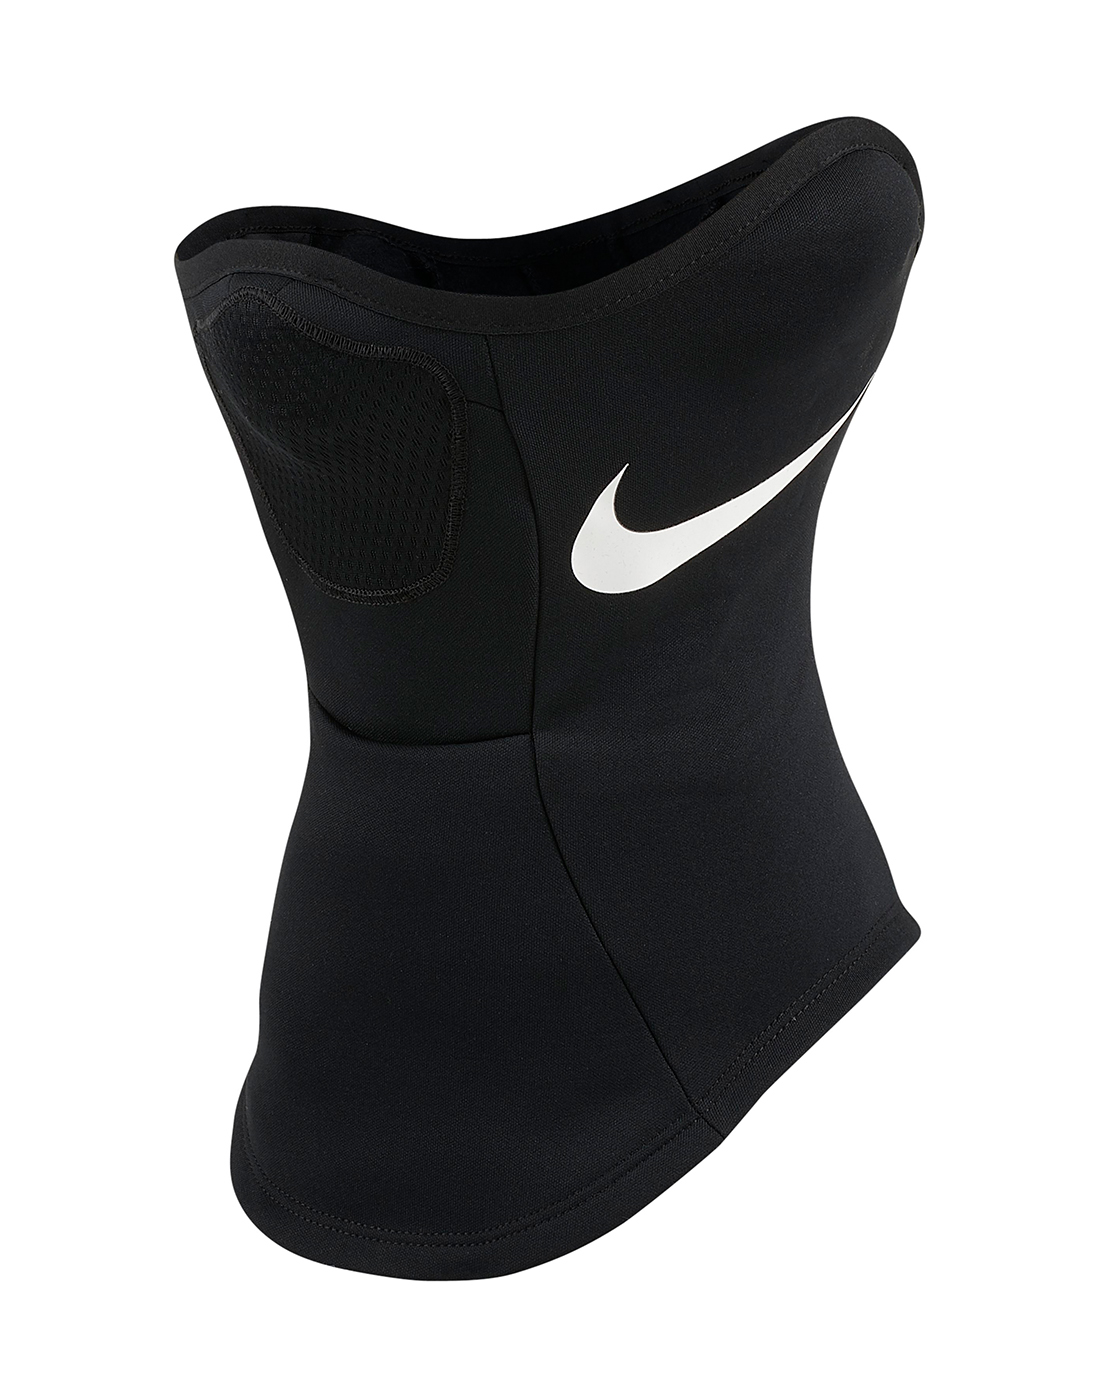 Nike Snood - Black | Life Style Sports IE